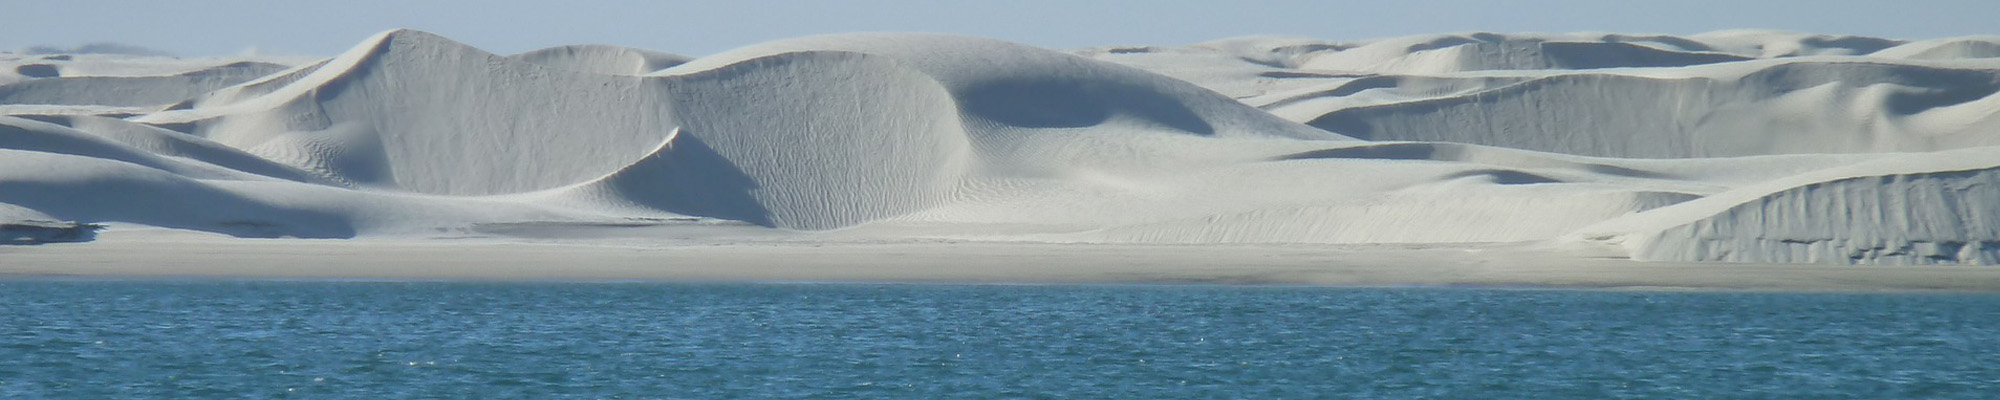 Salt Dunes